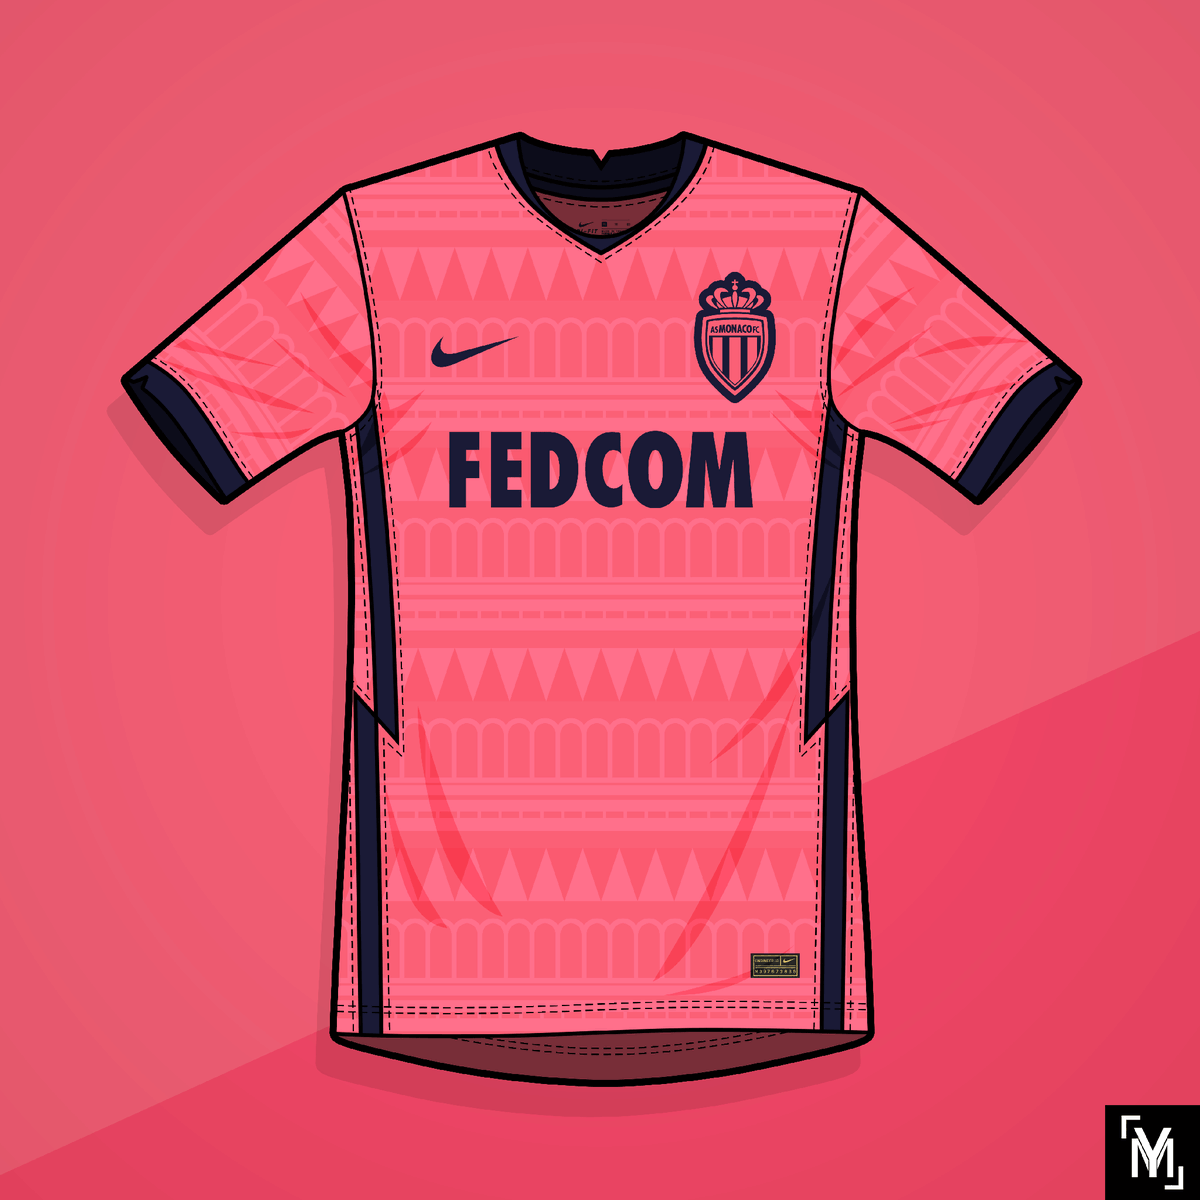 AS Monaco X Nike | Fantasy kits

#DagheMunegu #ASM #ASMonaco #Ligue1 #Nike #KitDesign #ConceptKit #FootballKitDesign